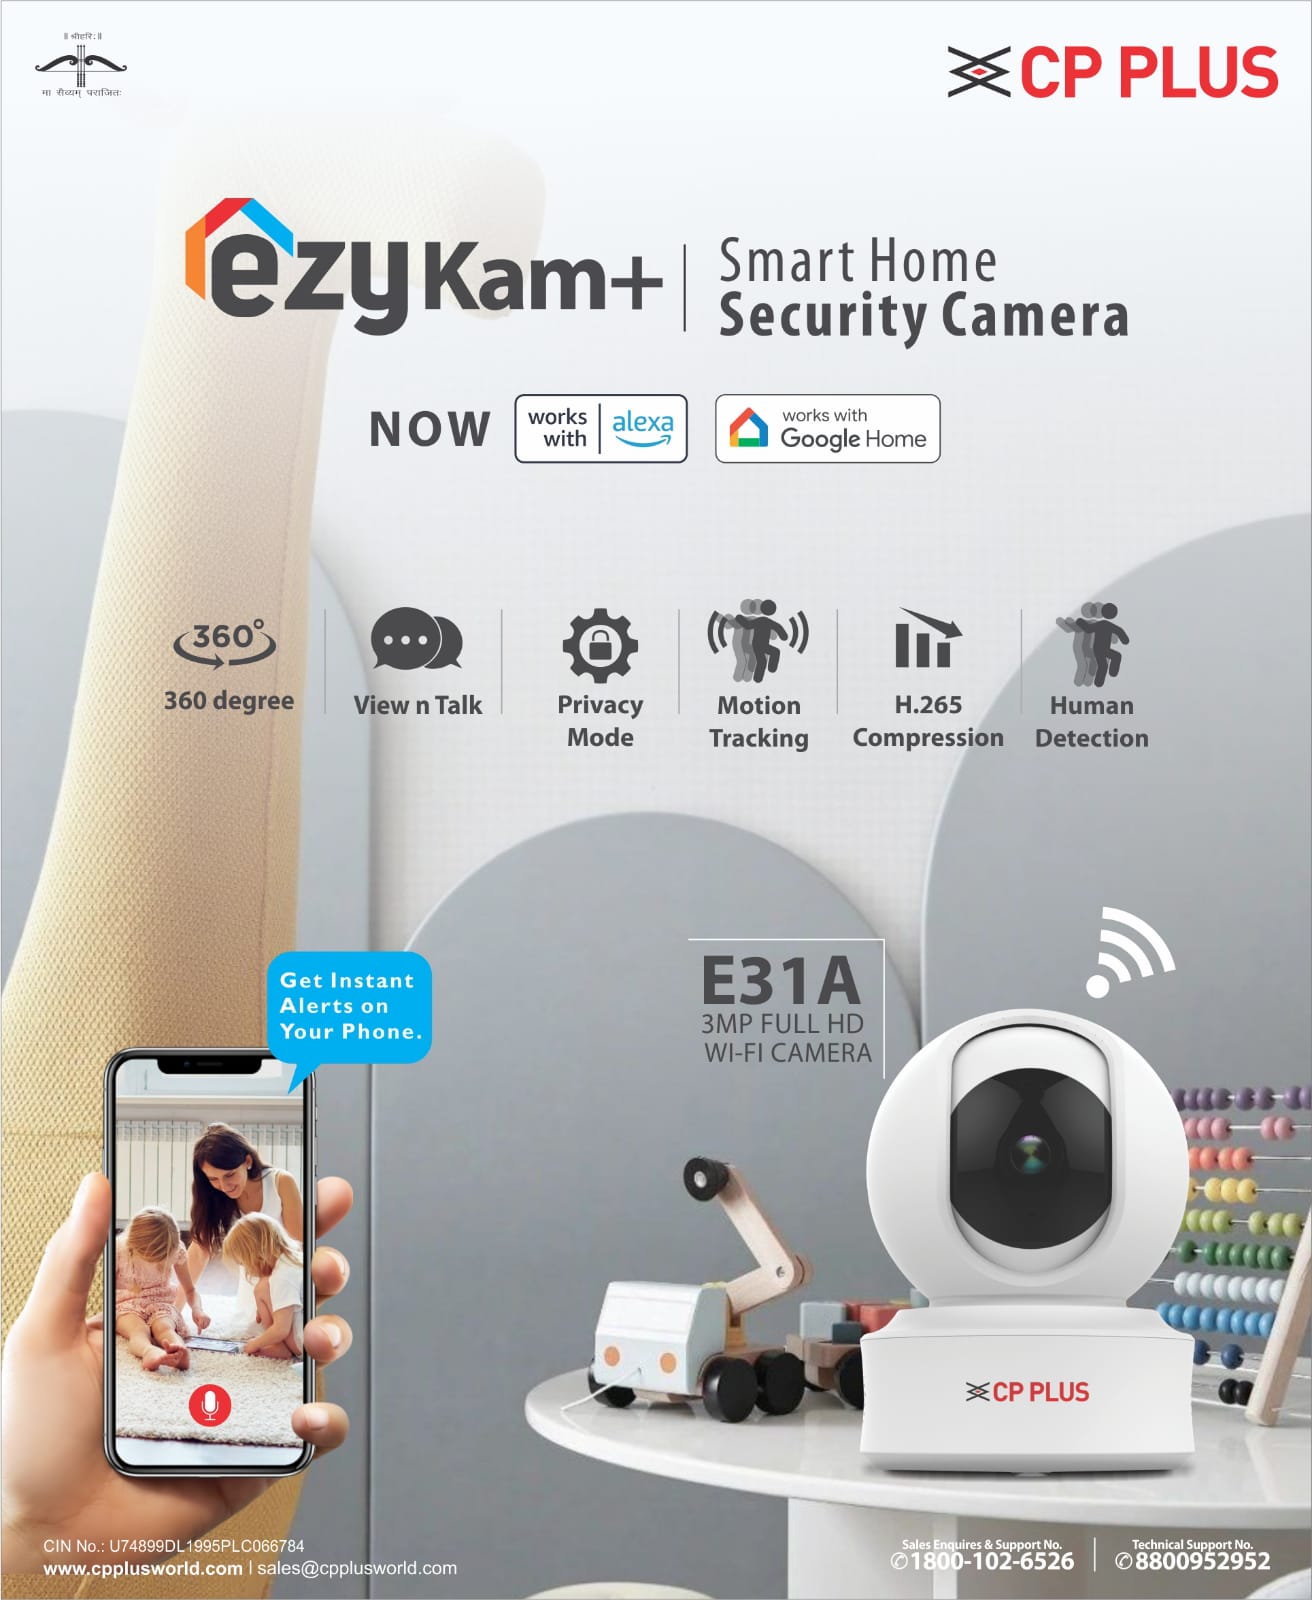 ezyKam+ Smart Home Security Camera